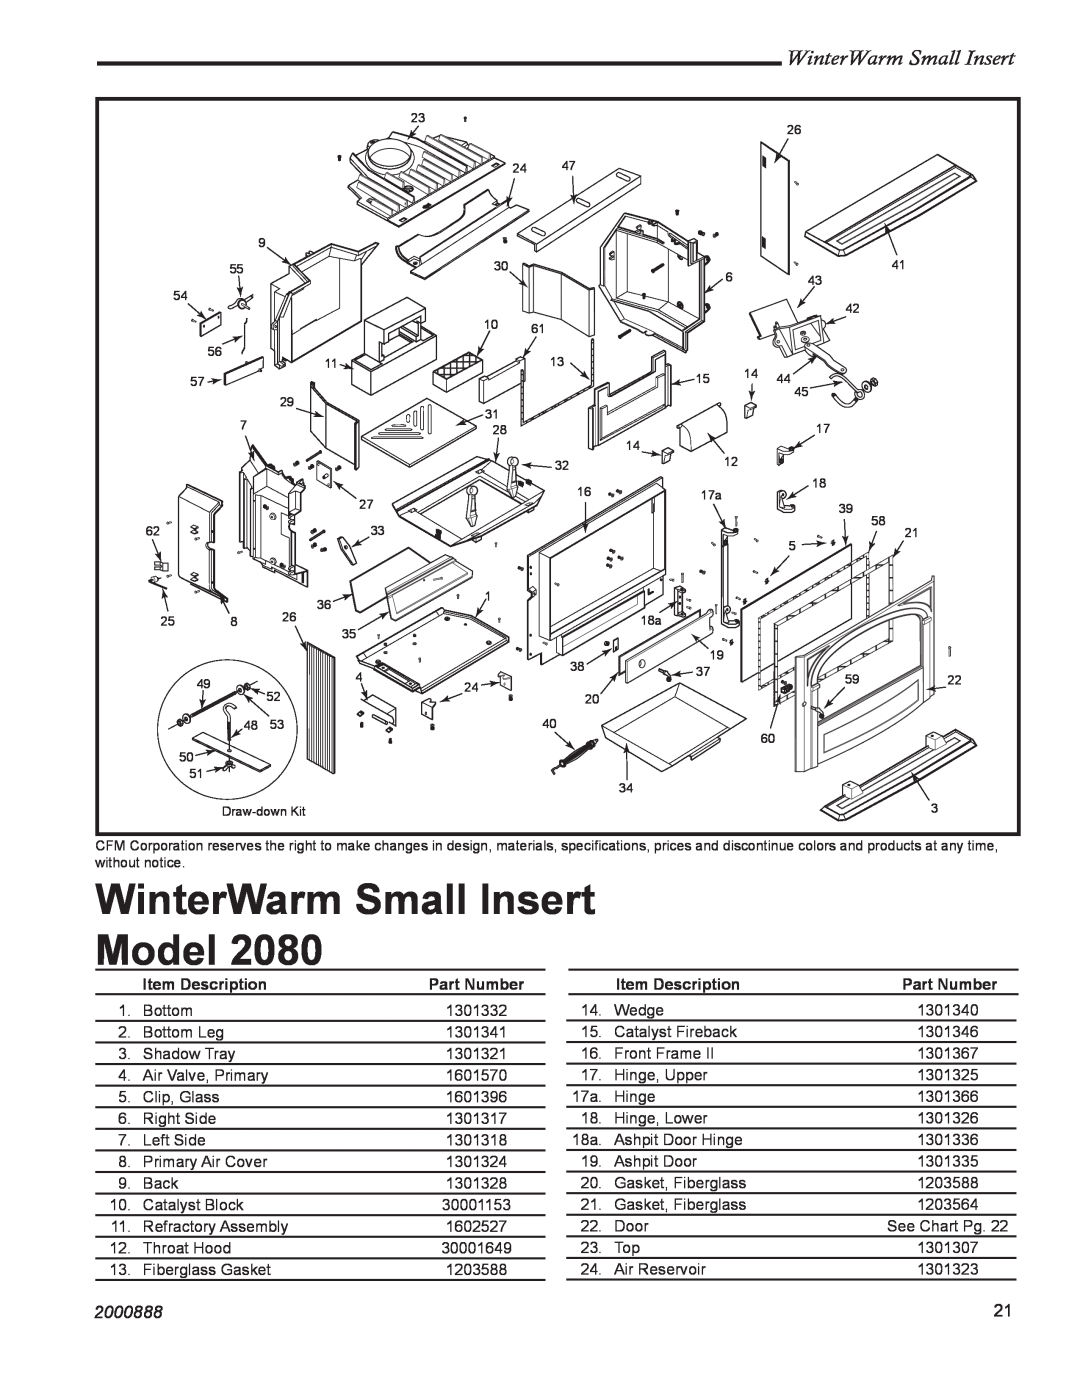 CFM Corporation Winter Warm - Small Insert WinterWarm Small Insert Model, 2000888, Item Description, Part Number 